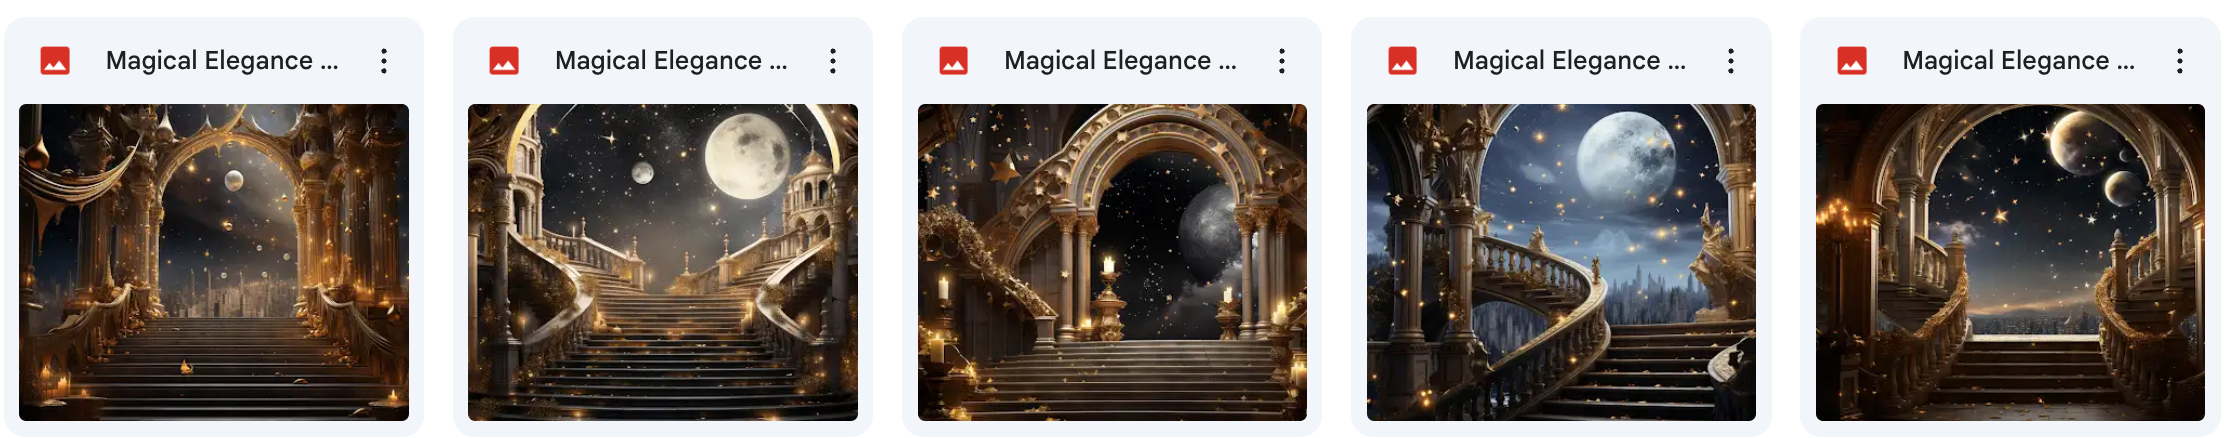 Magical Elegance Asset Pack - Meg Bitton Productions